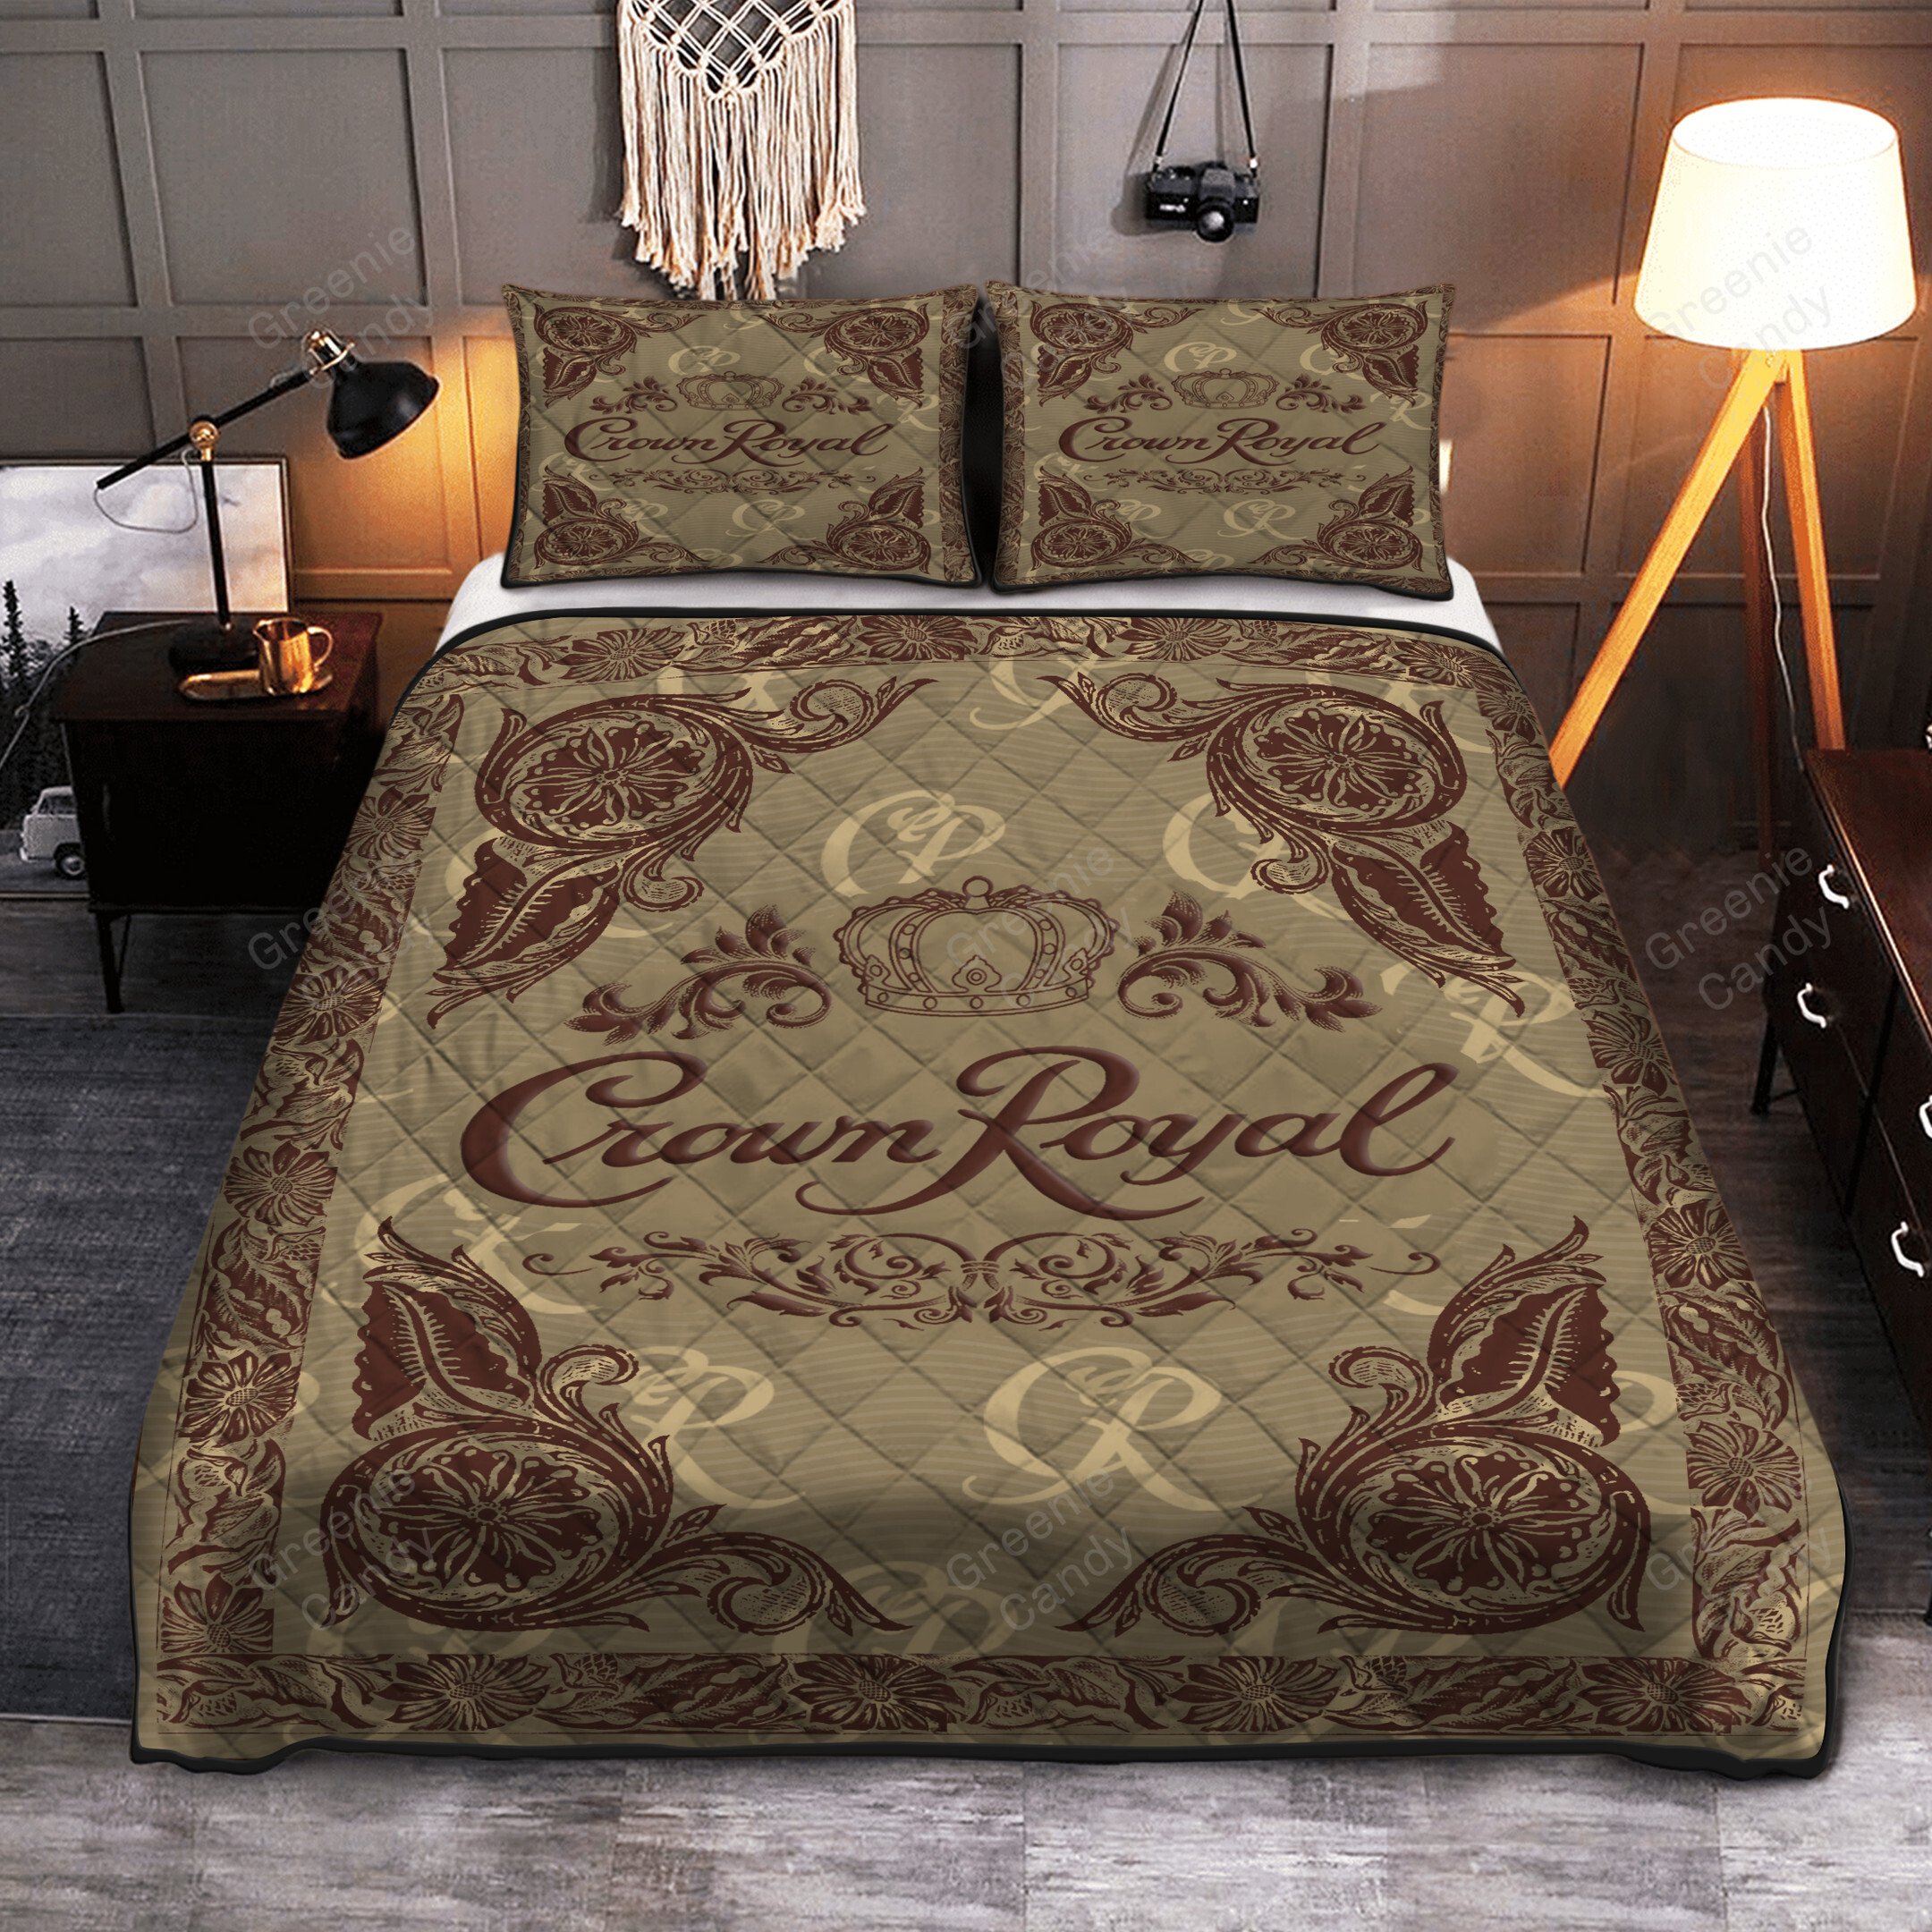 Crown Royal Vanilla Whisky quilt bedding set